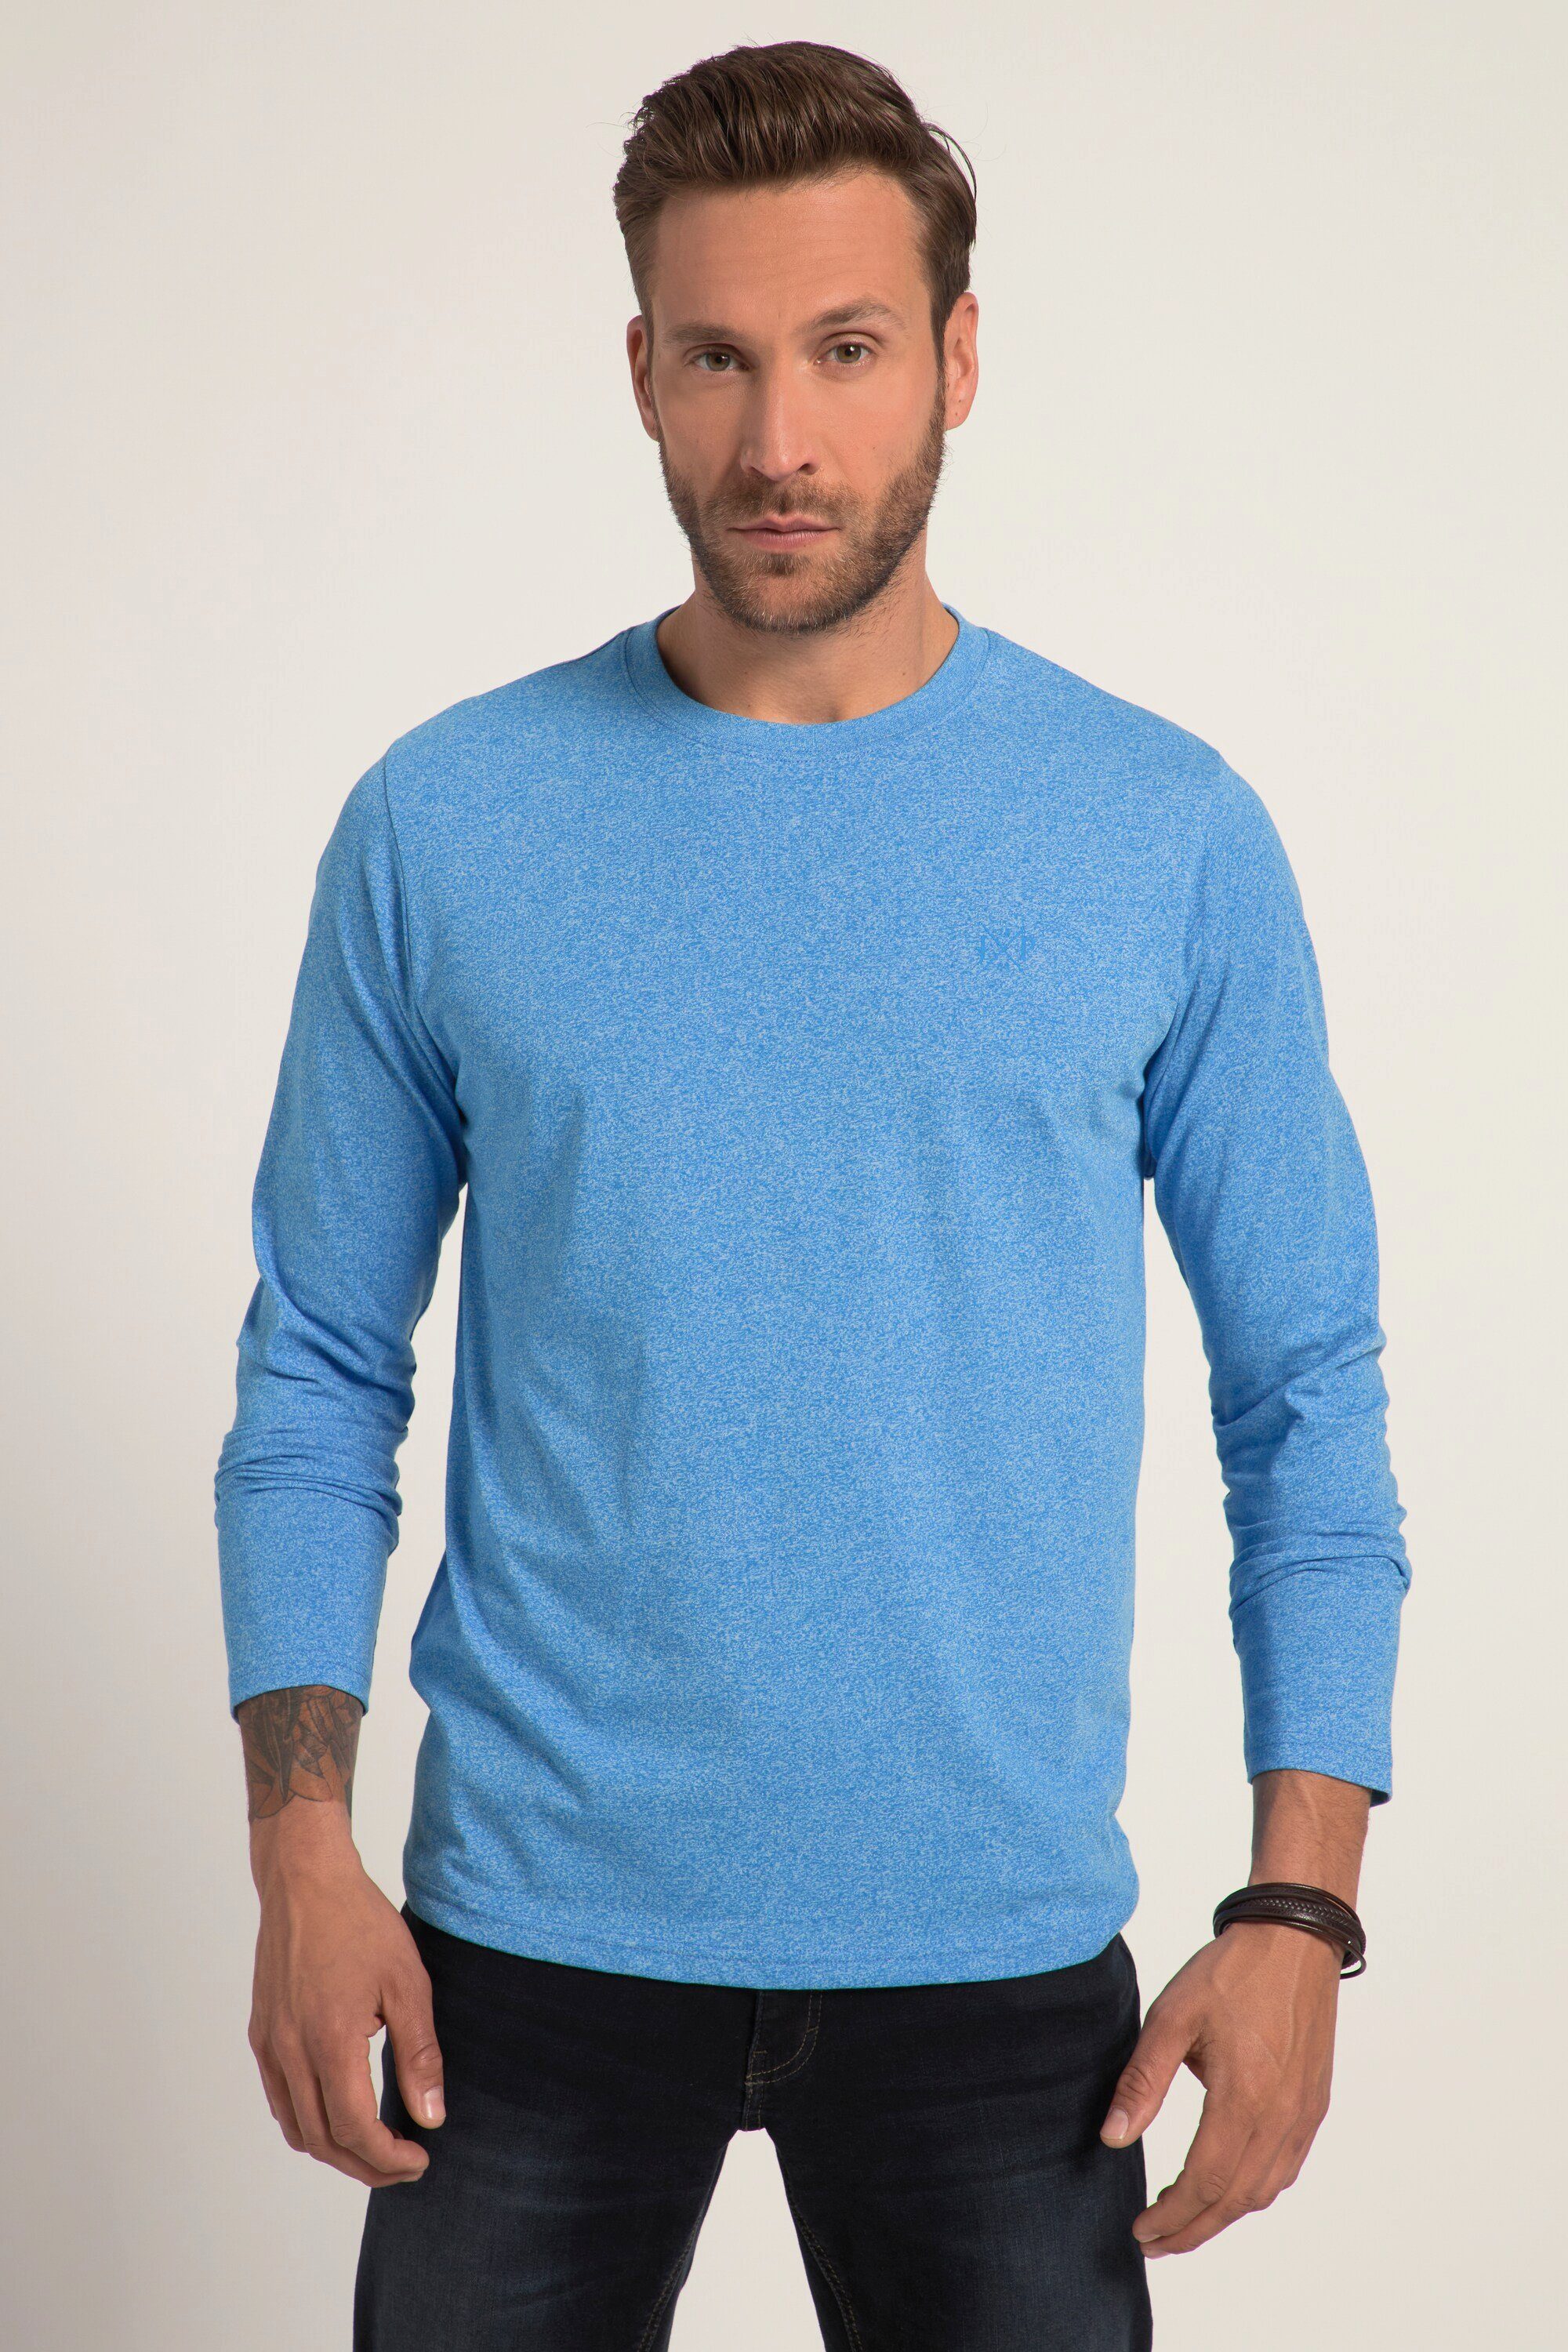 JP1880 T-Shirt Langarmshirt Rundhals hochwertige Melange Jersey | T-Shirts